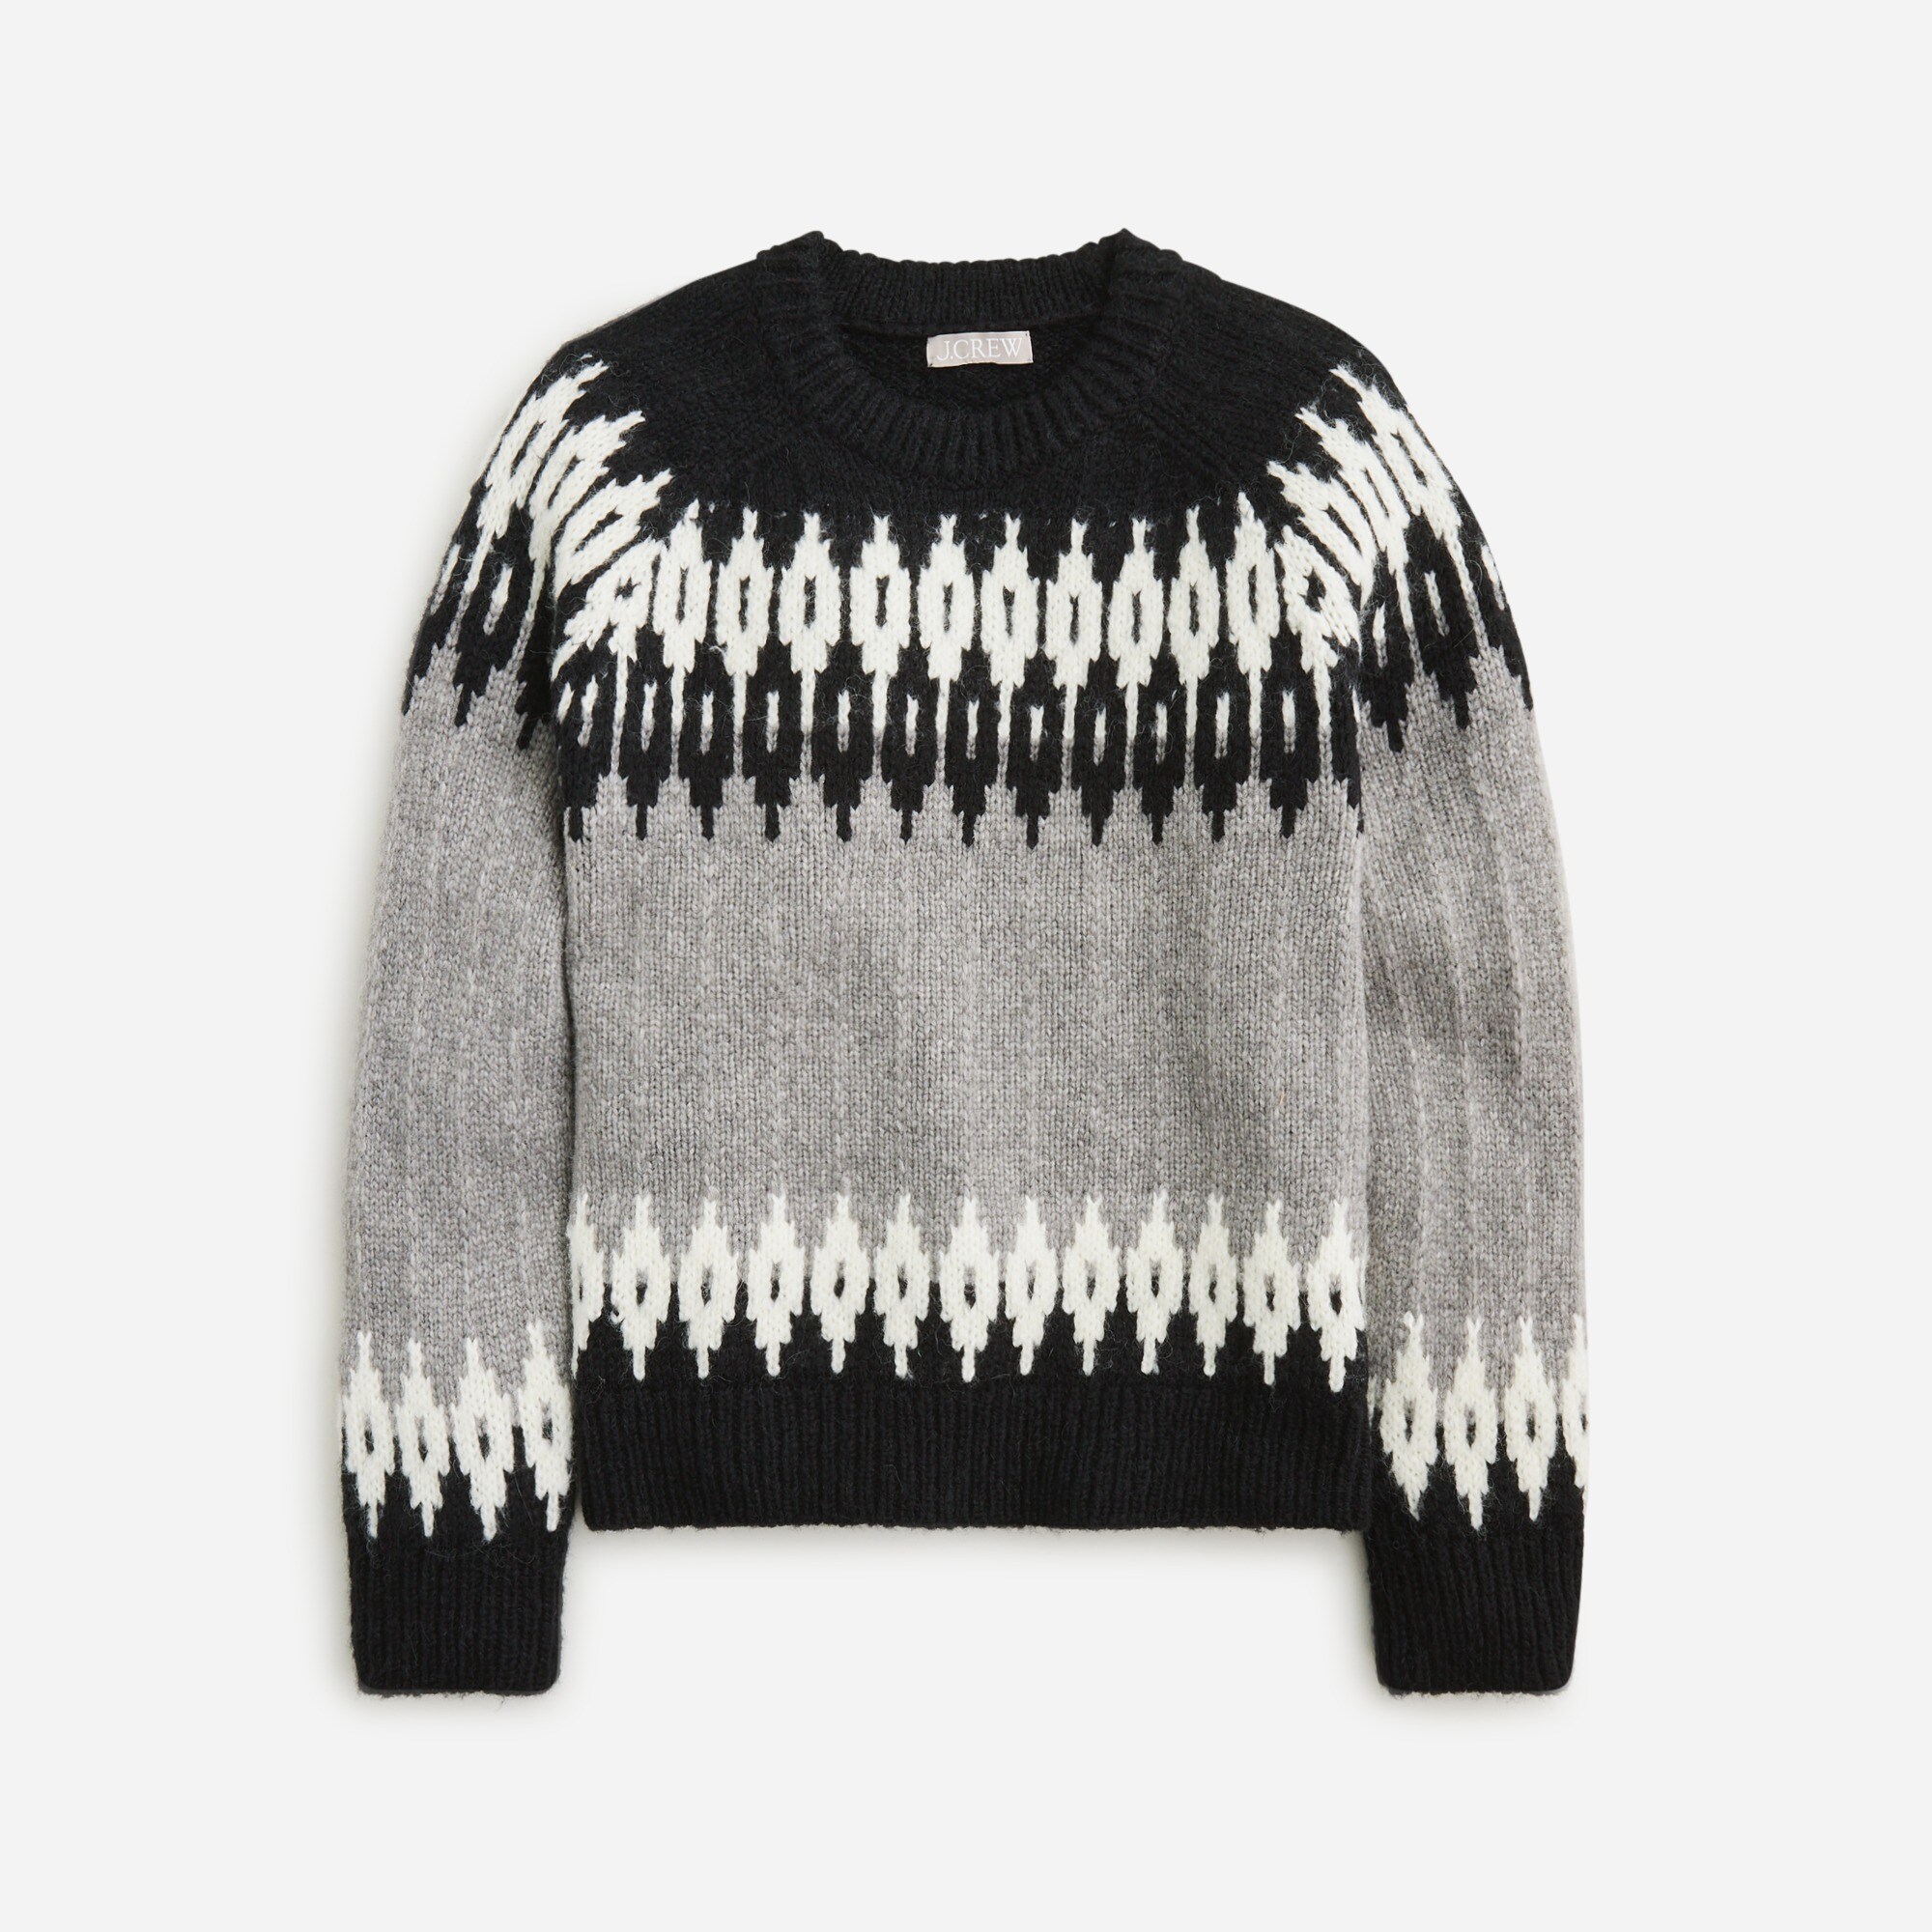  Fair Isle crewneck sweater